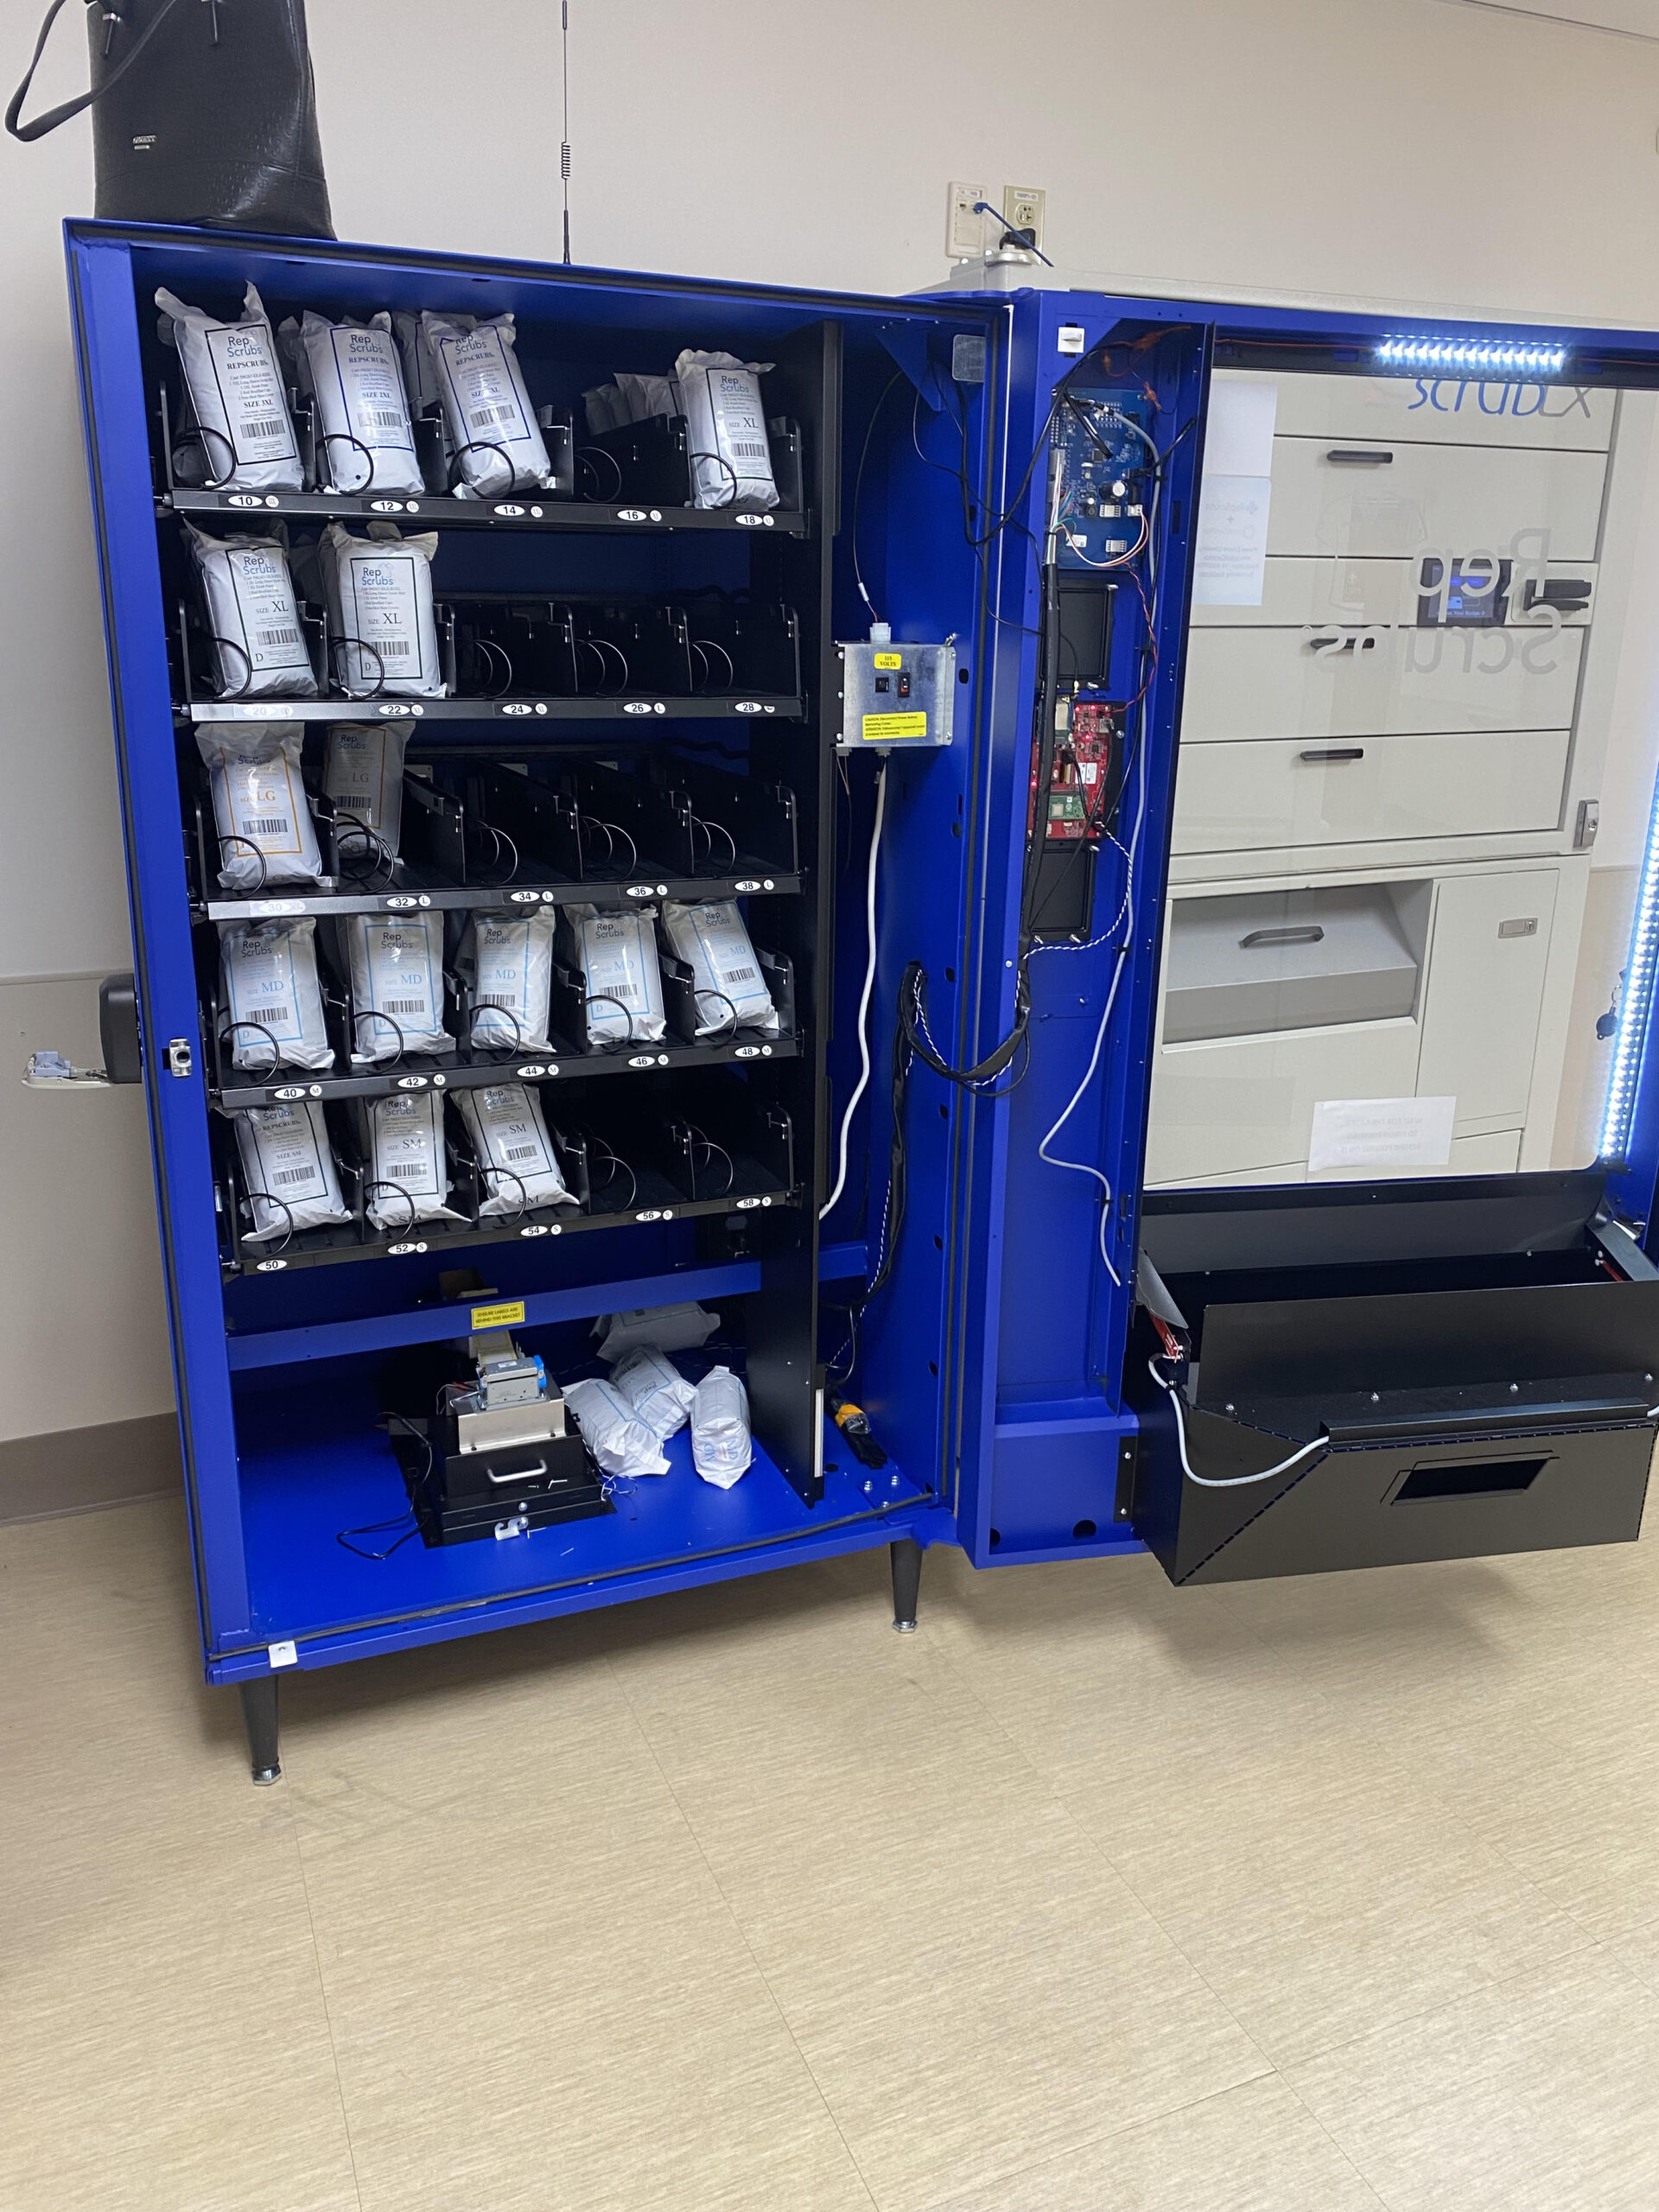 Maintenance & Programming on 
Hospital Scrub Machines by Vansin Network